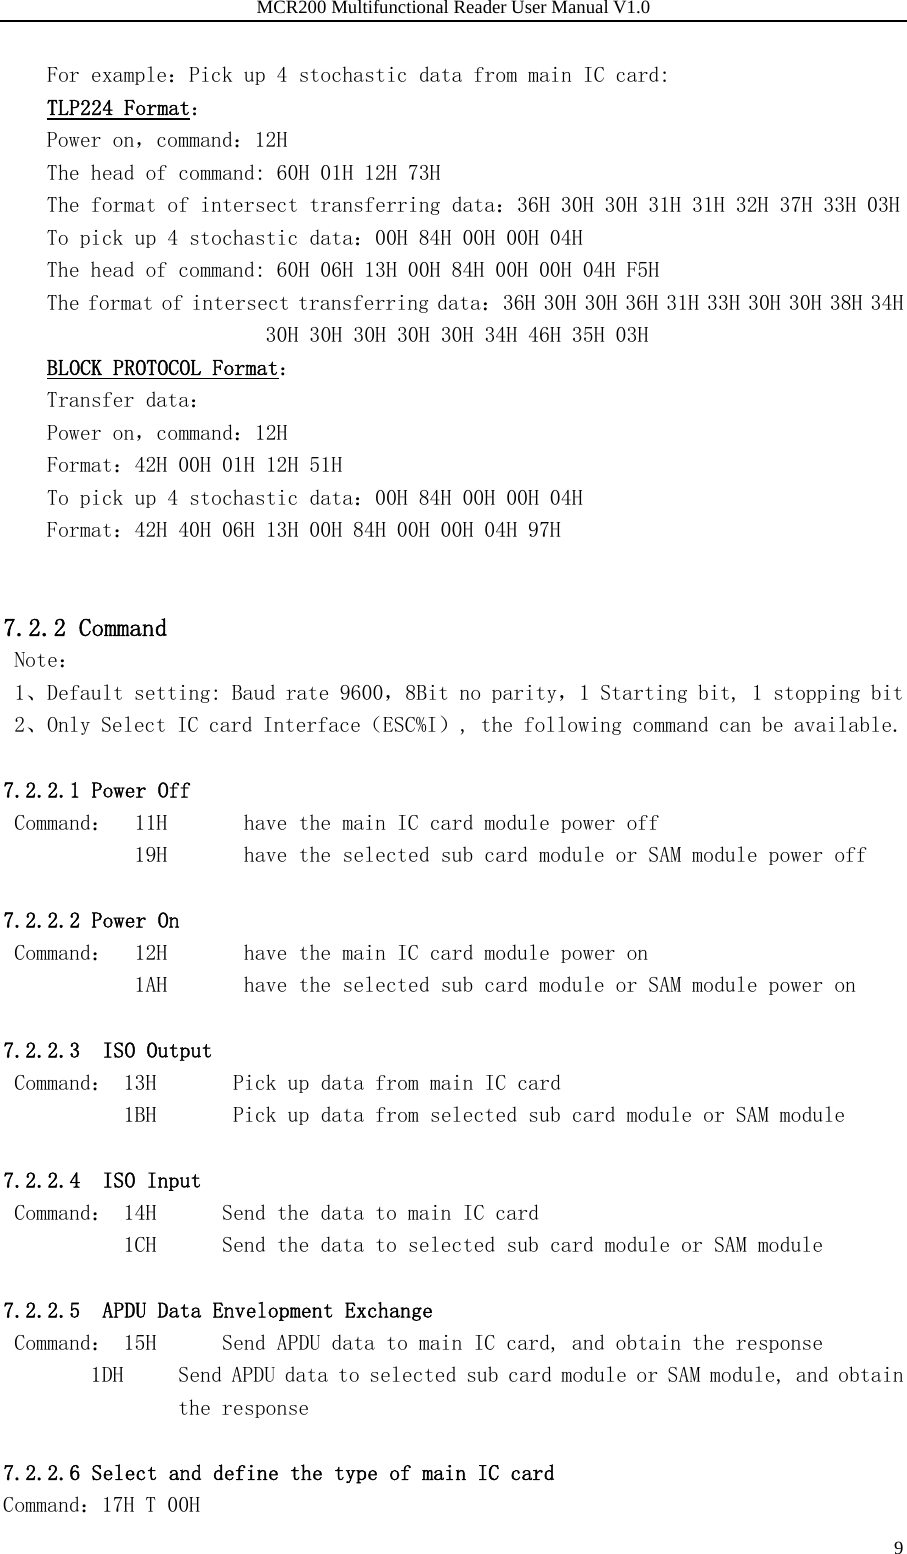 Page 9 of 12 - 一、概述 MCR200 Multifunctional Reader User Manual V1.0